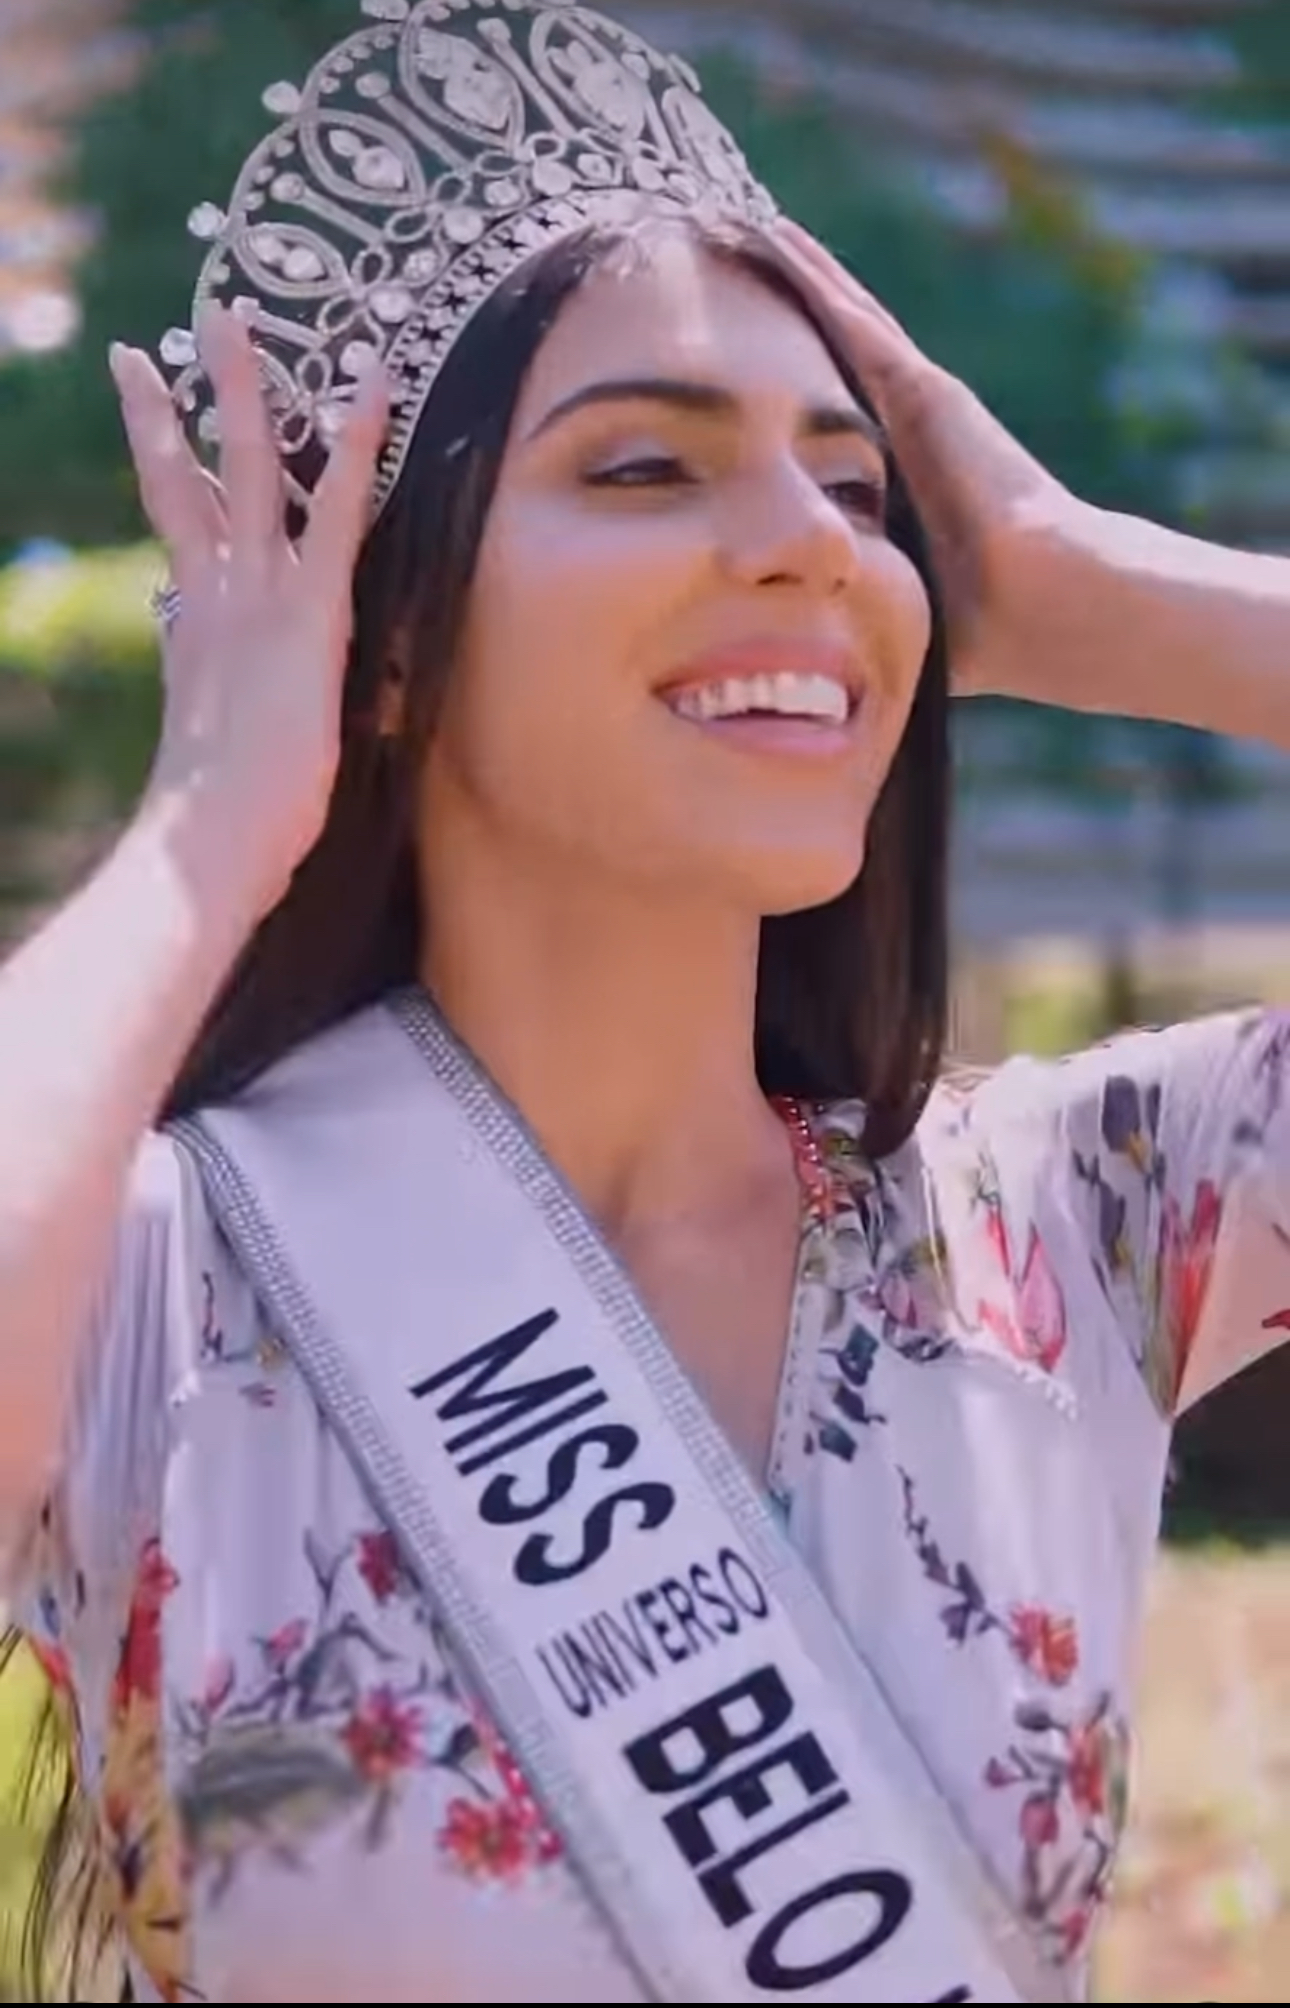 Teófilo-otonense ganha o título de Miss Universo Belo Horizonte e vai disputar o Miss Universo Minas Gerais